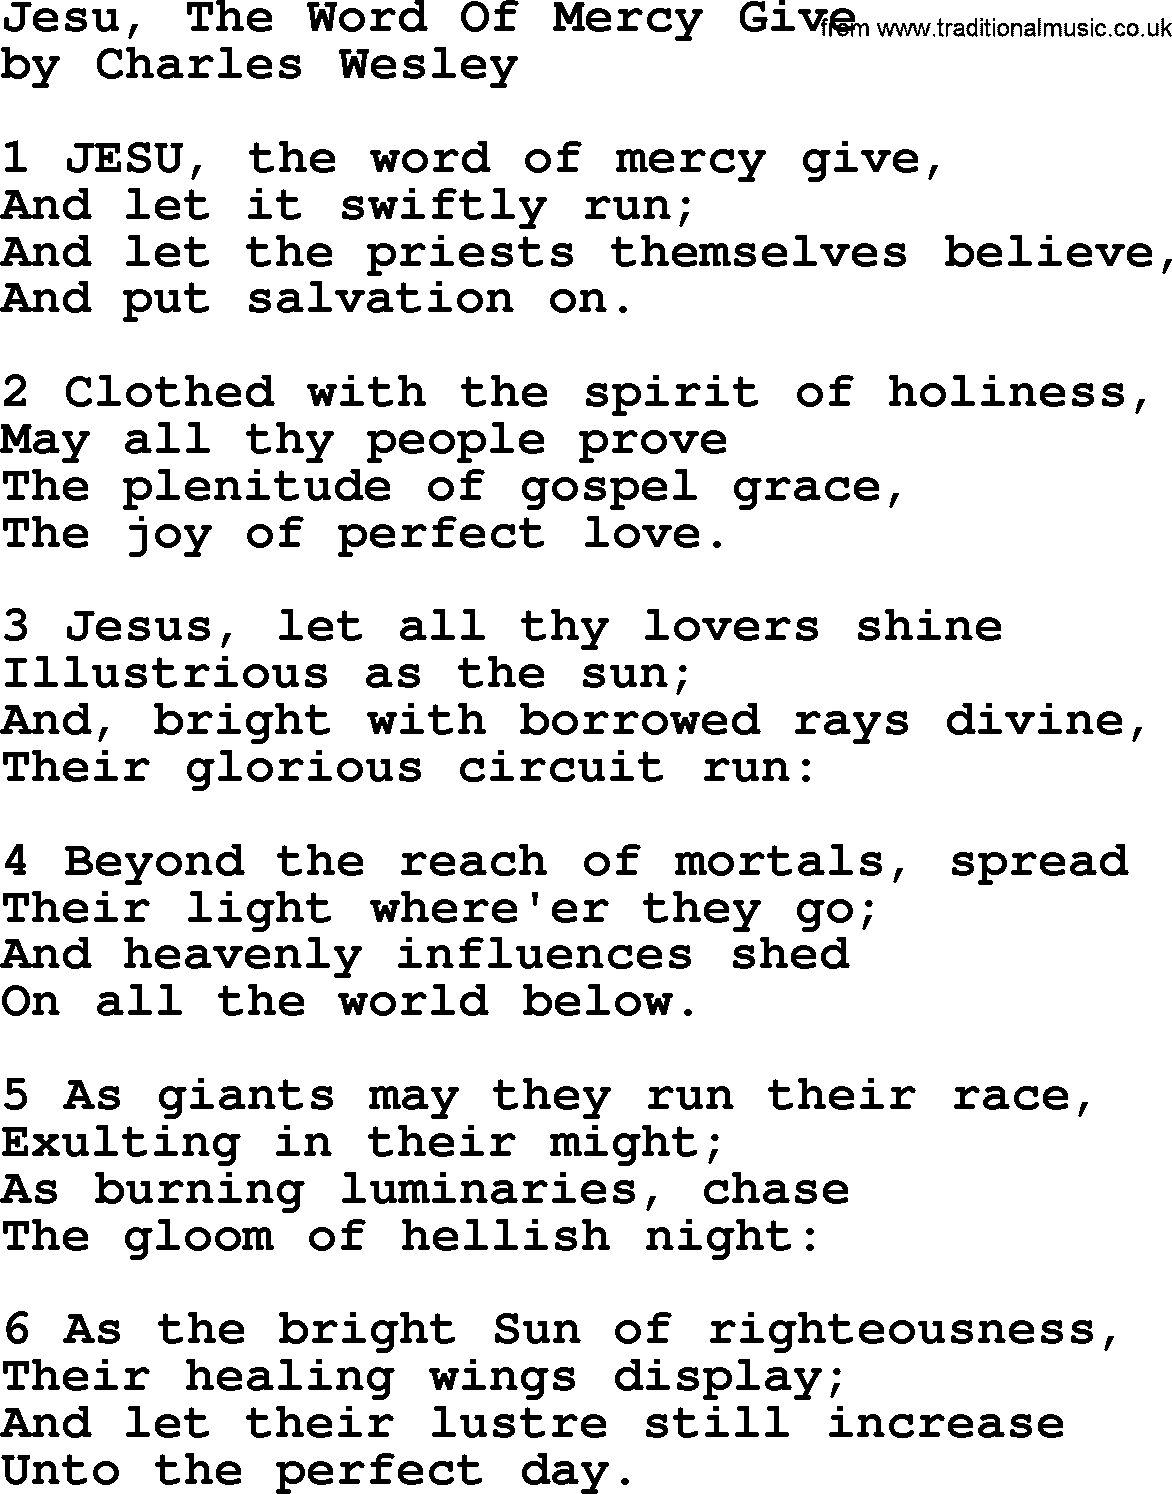 Charles Wesley hymn: Jesu, The Word Of Mercy Give, lyrics